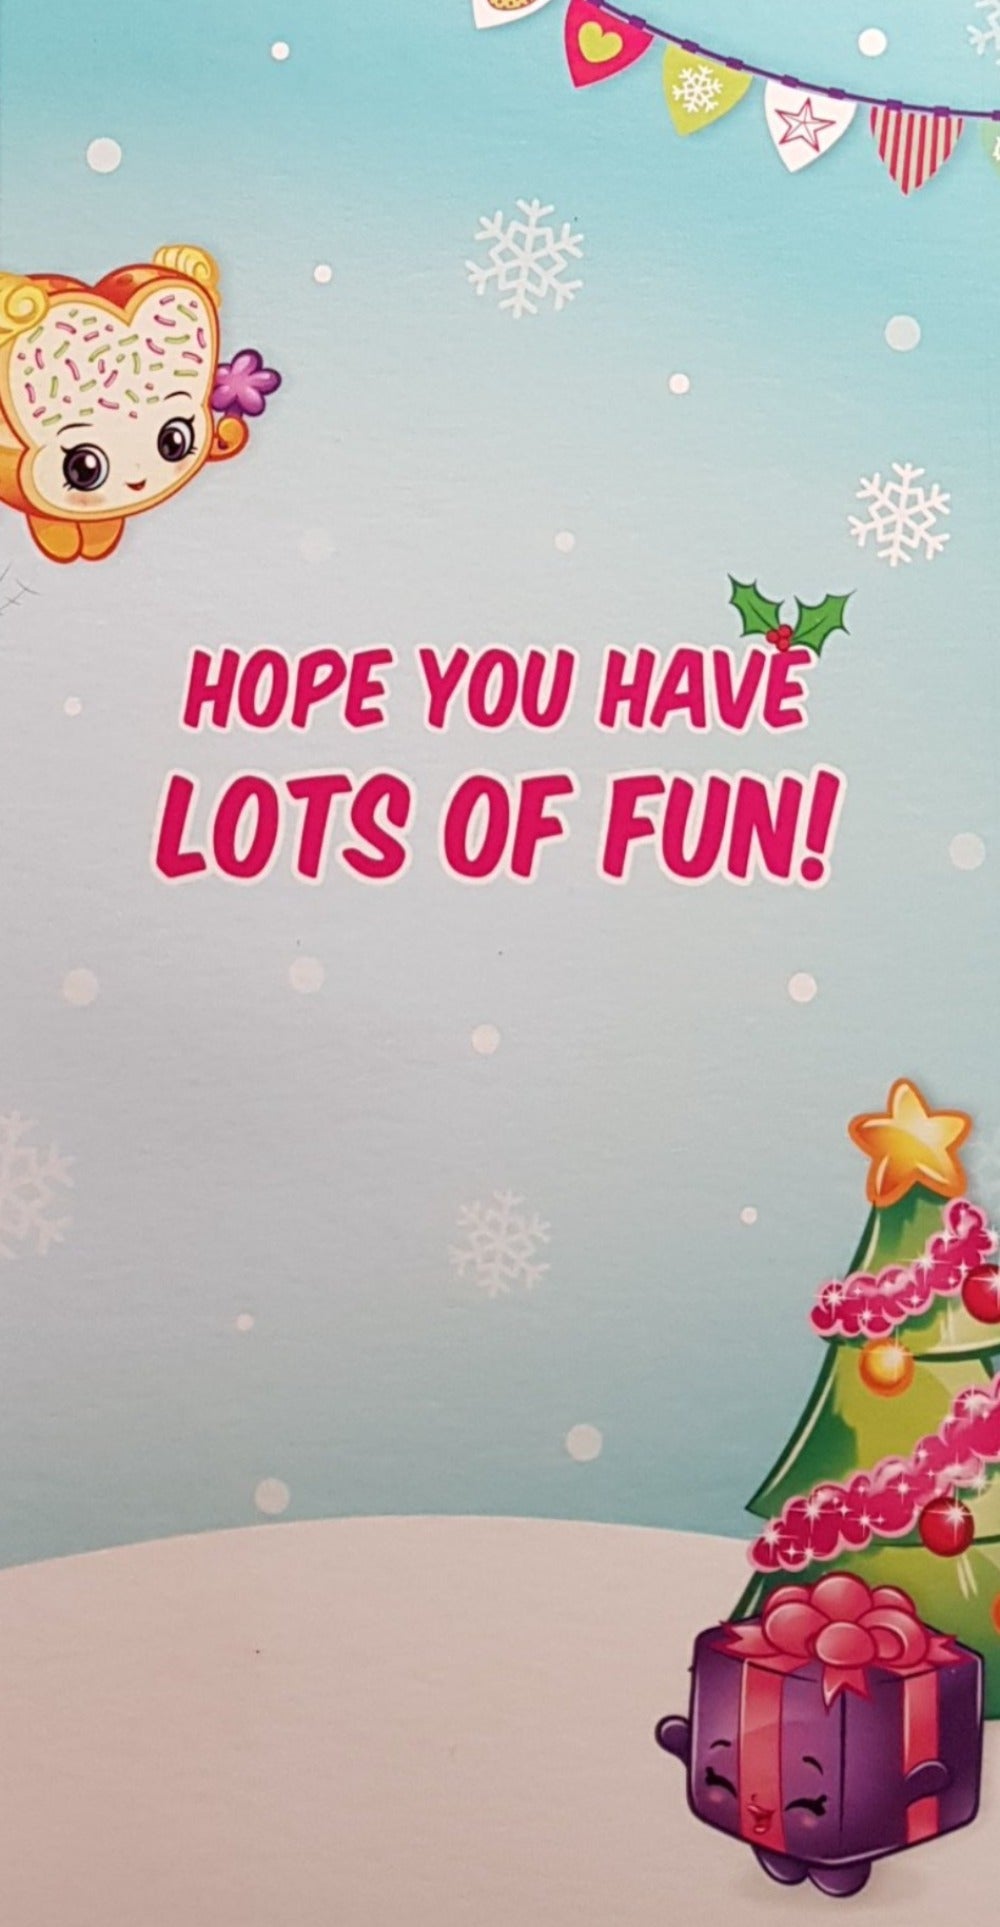 Christmas Card - Funny Characters Celebrating Christmas